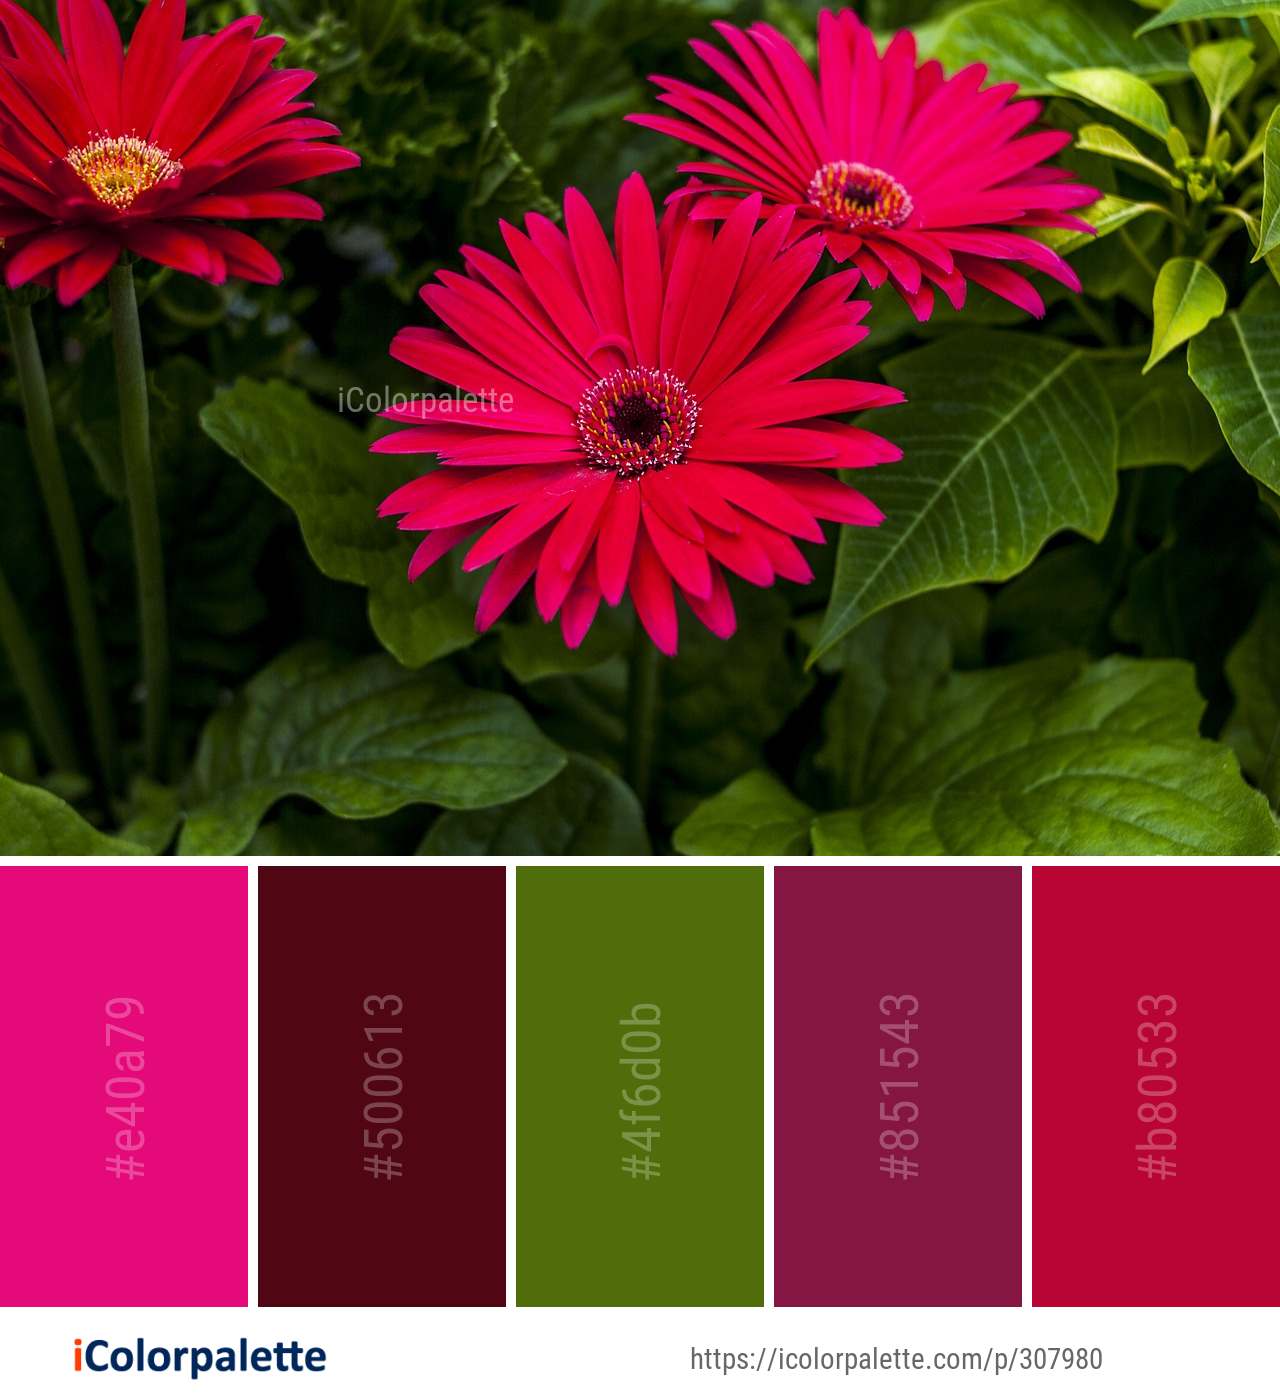 Color Palette Ideas from Flower Plant Flora Image | iColorpalette